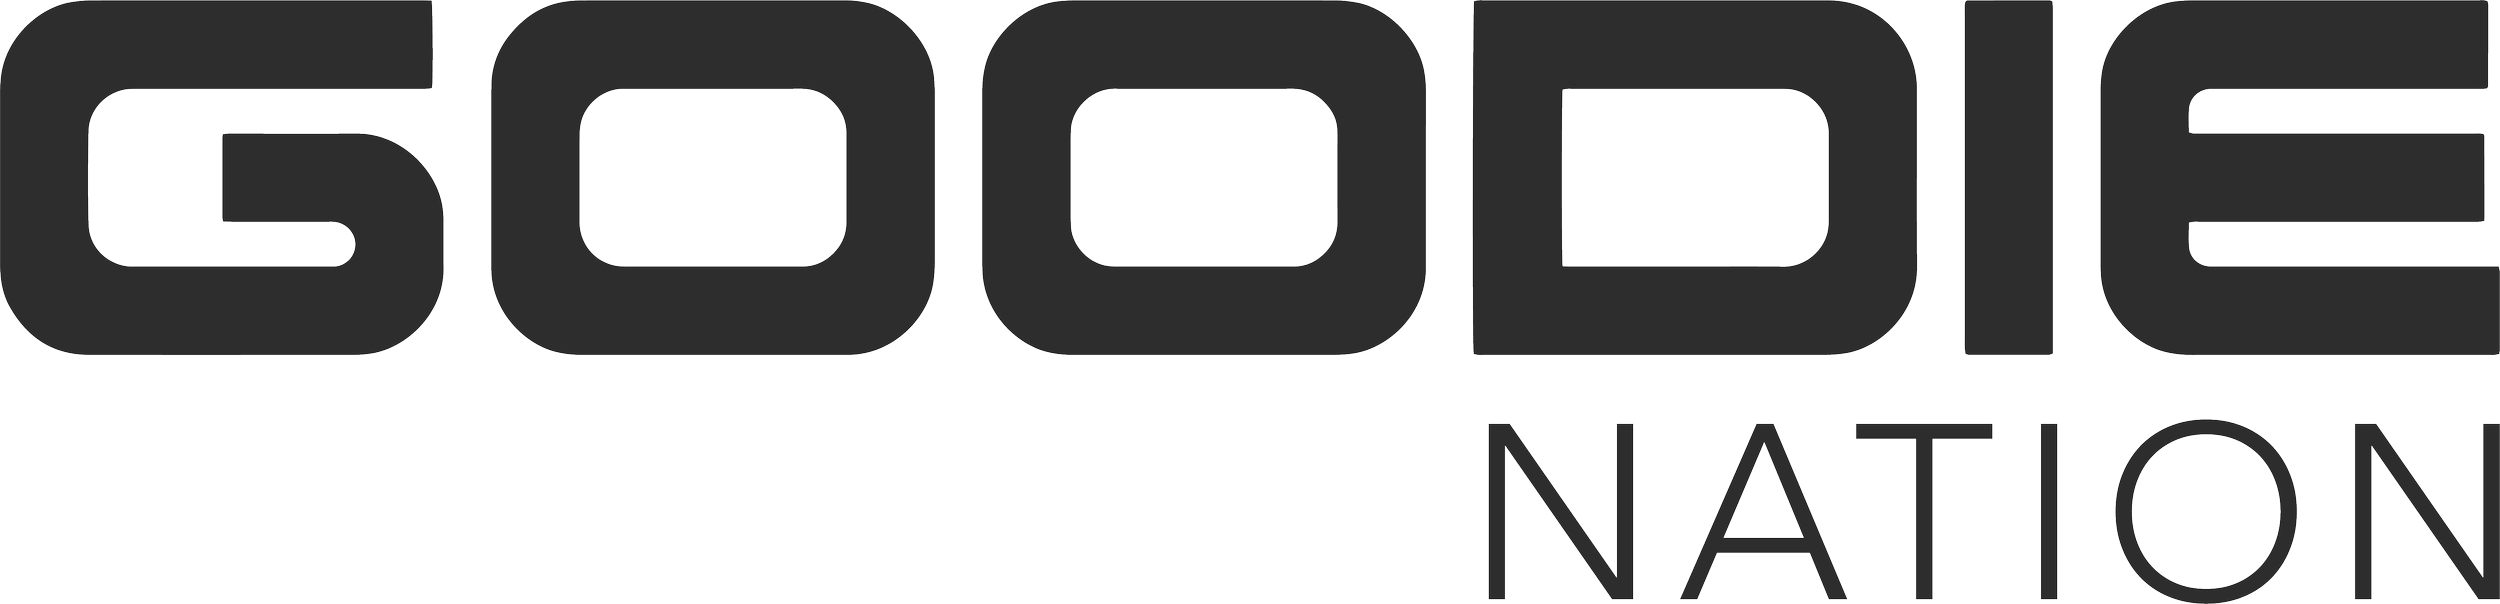 Goodie-Logo-black.png